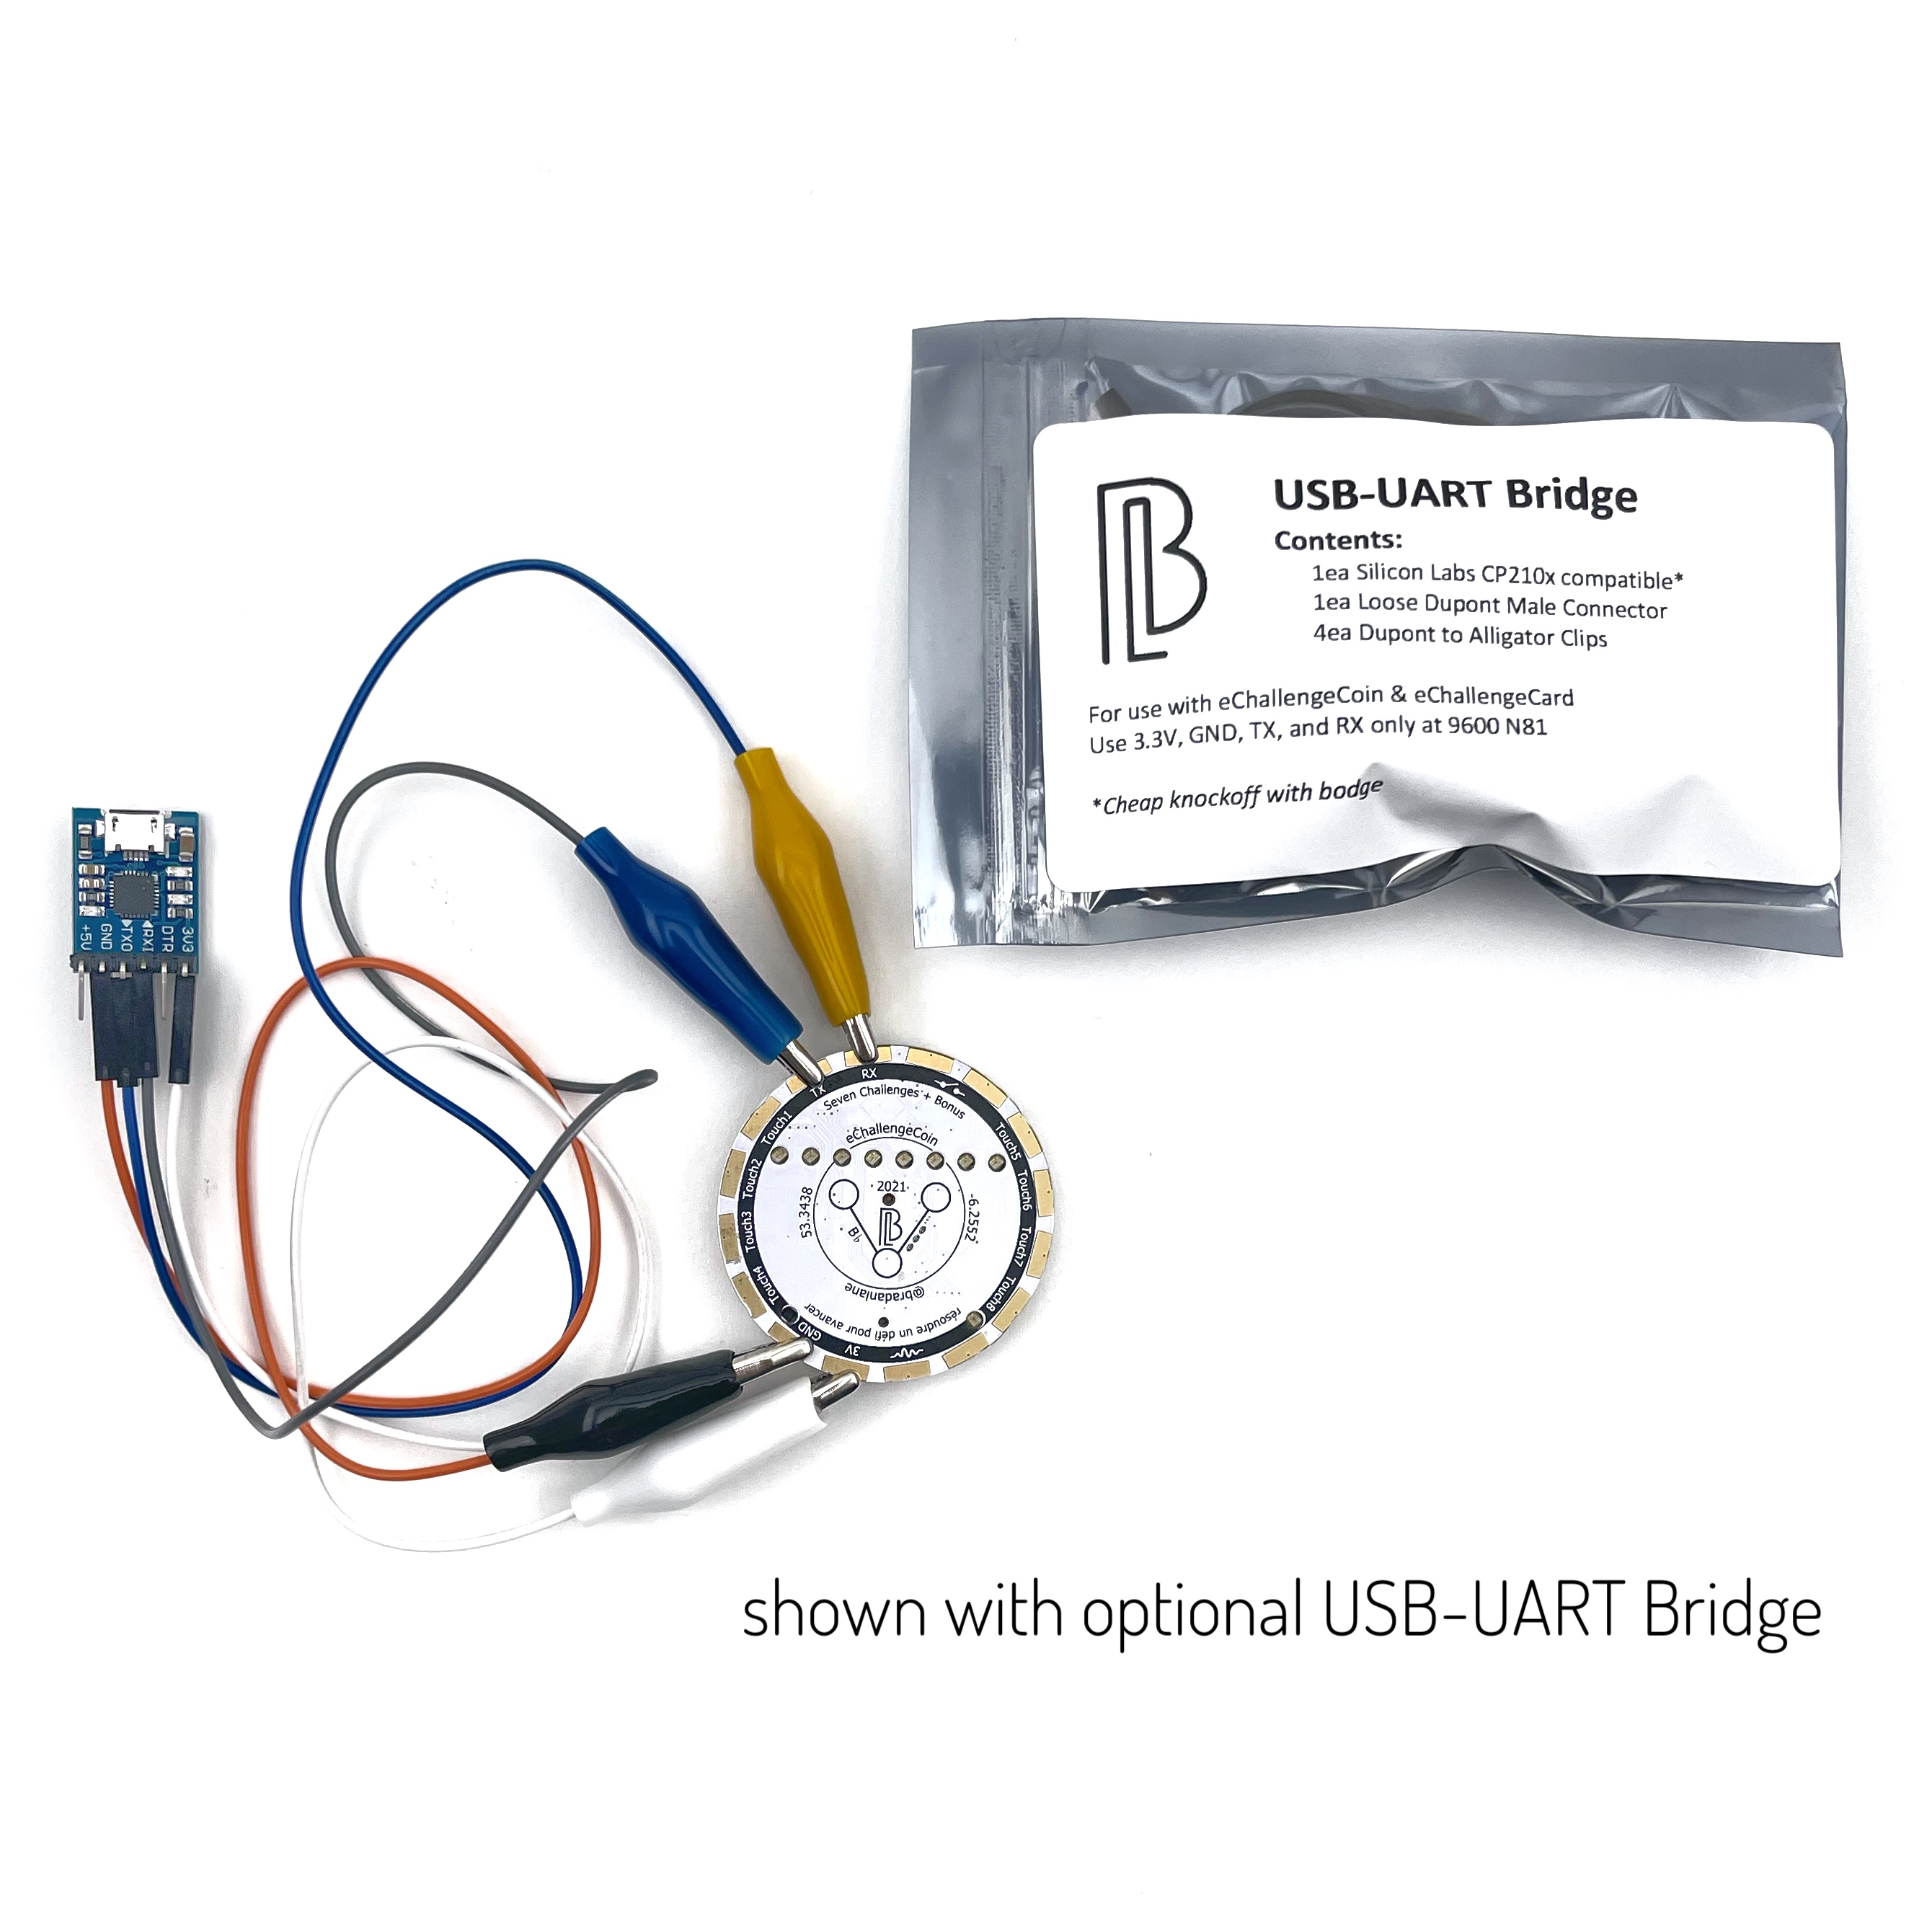 optional USB-UART bridge